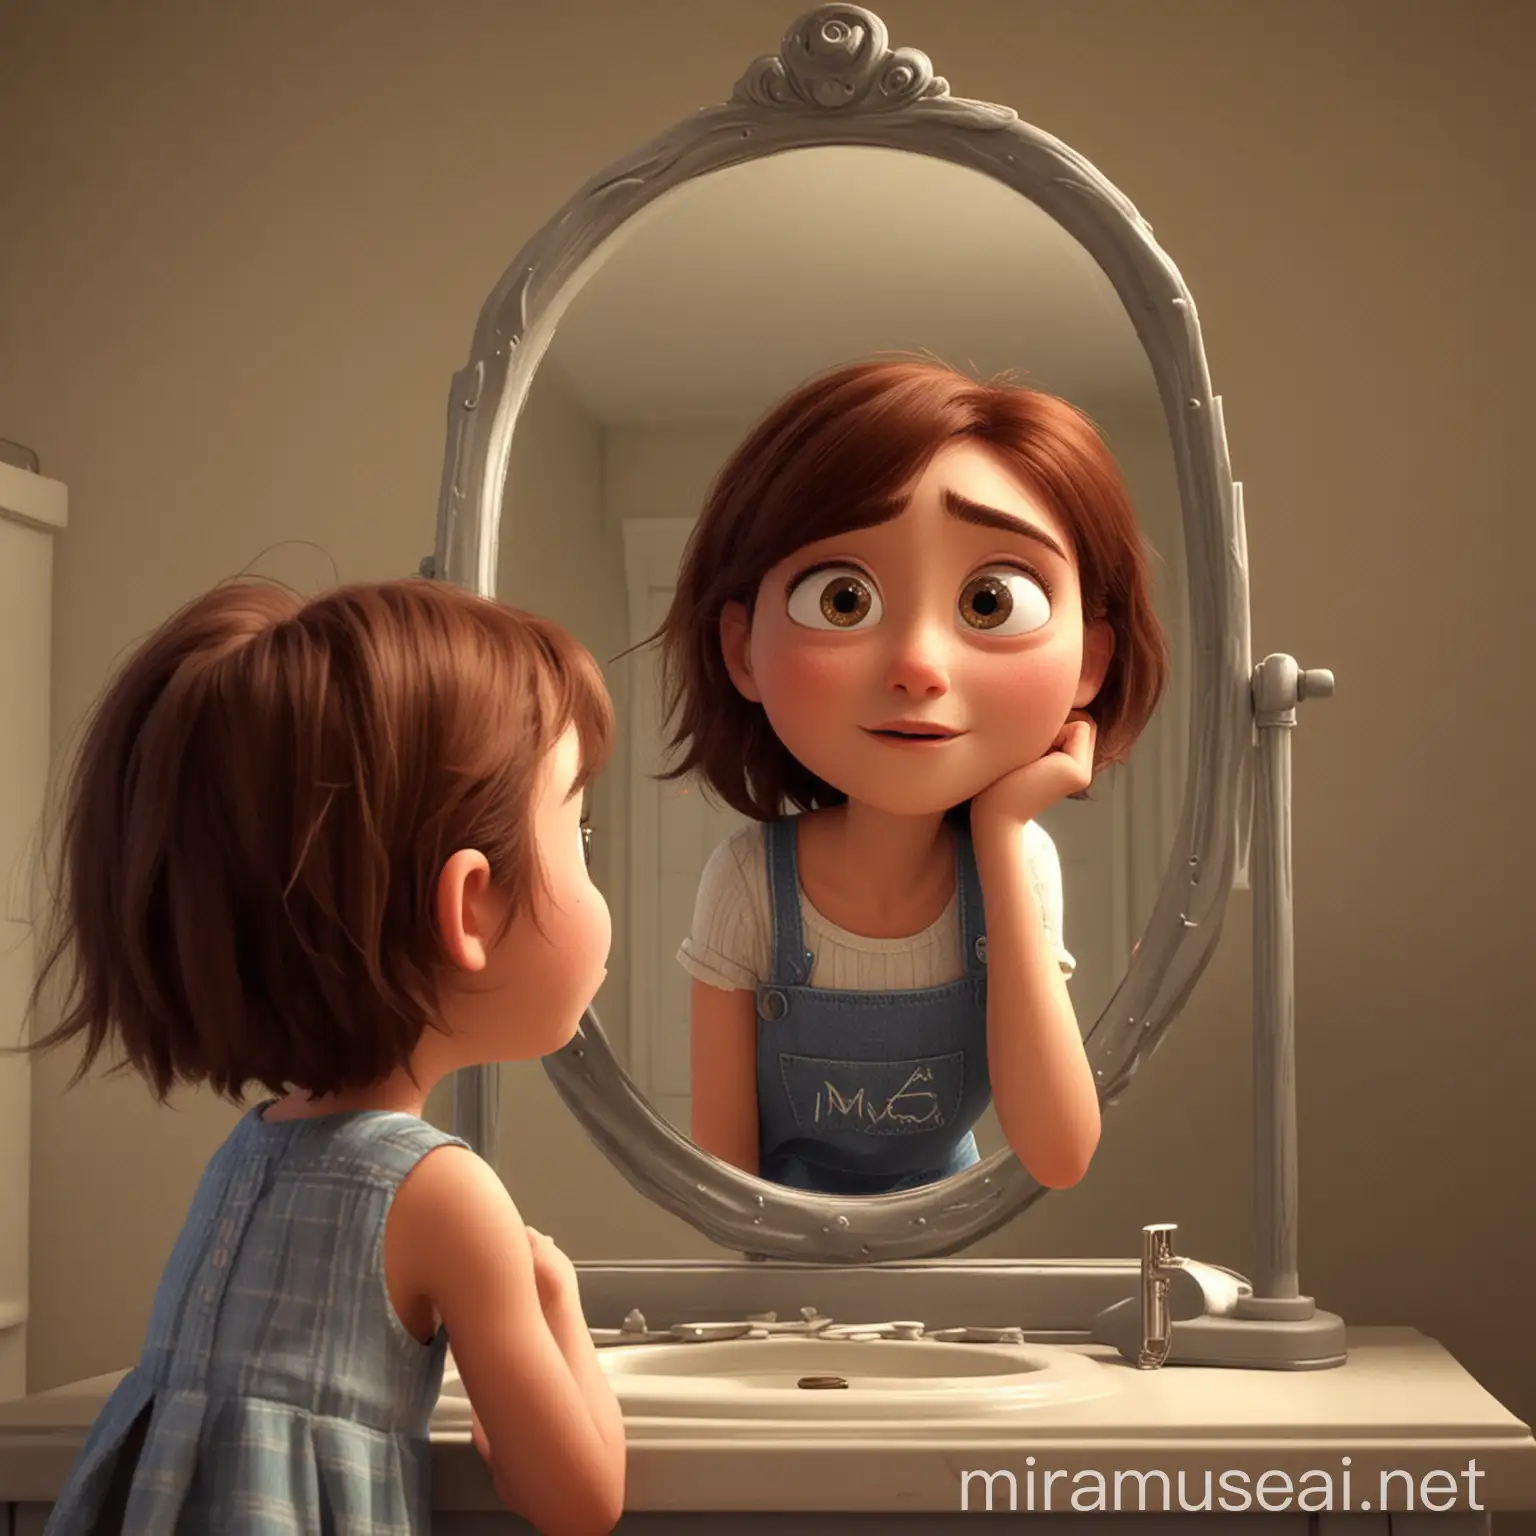 Mother Admiring Herself in Mirror Pixar Style